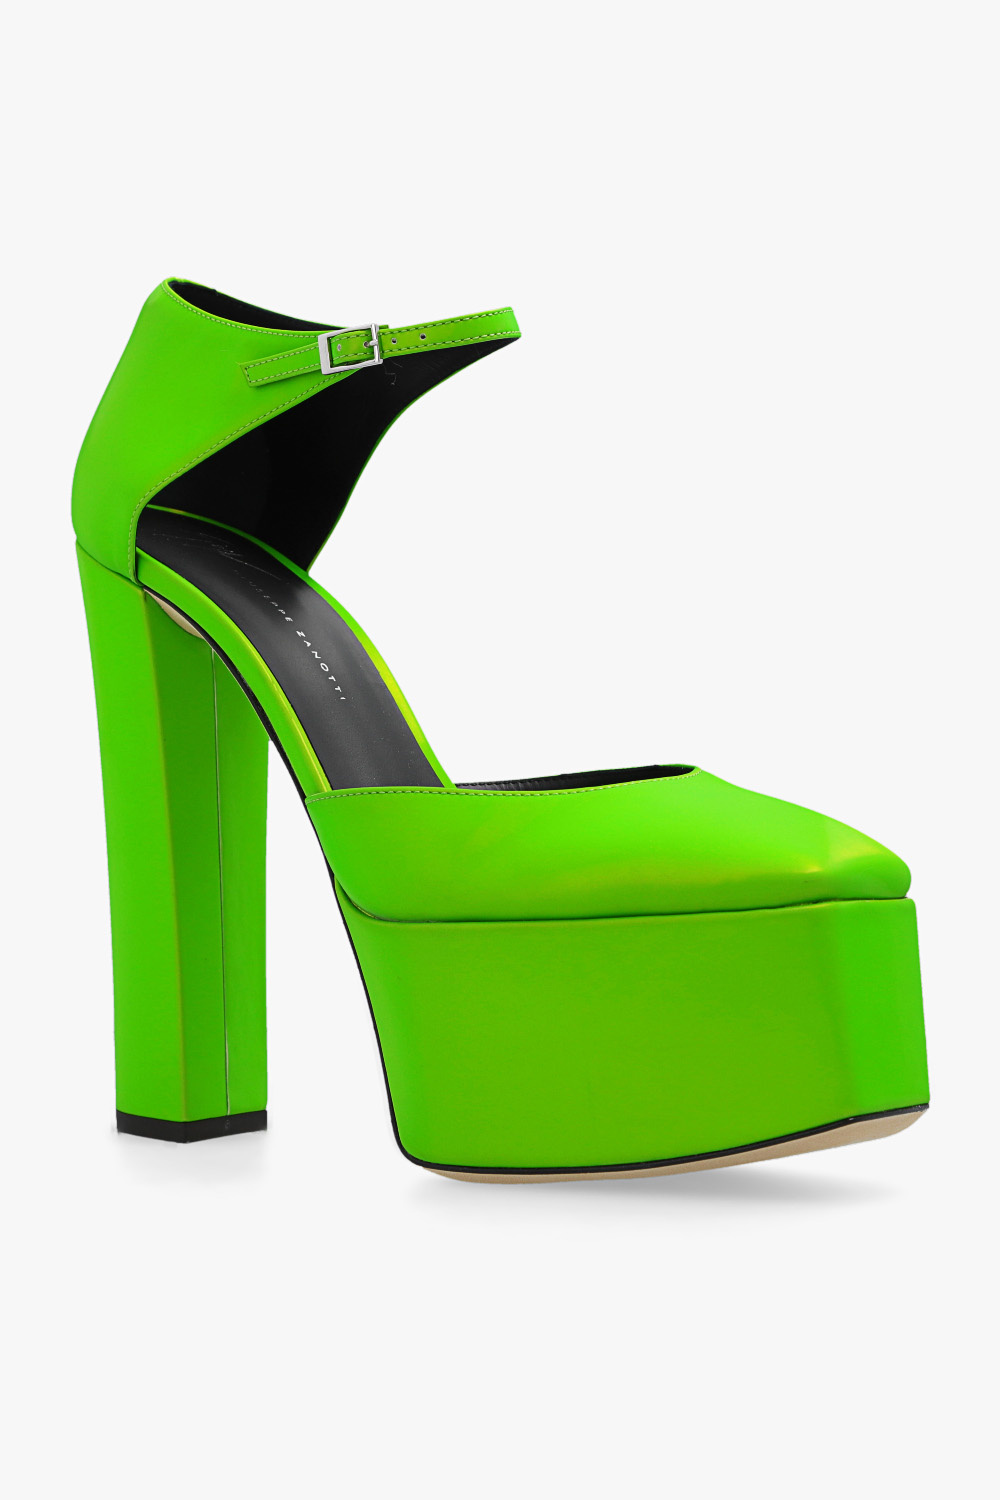 Giuseppe Zanotti ‘New York’ platform shoes